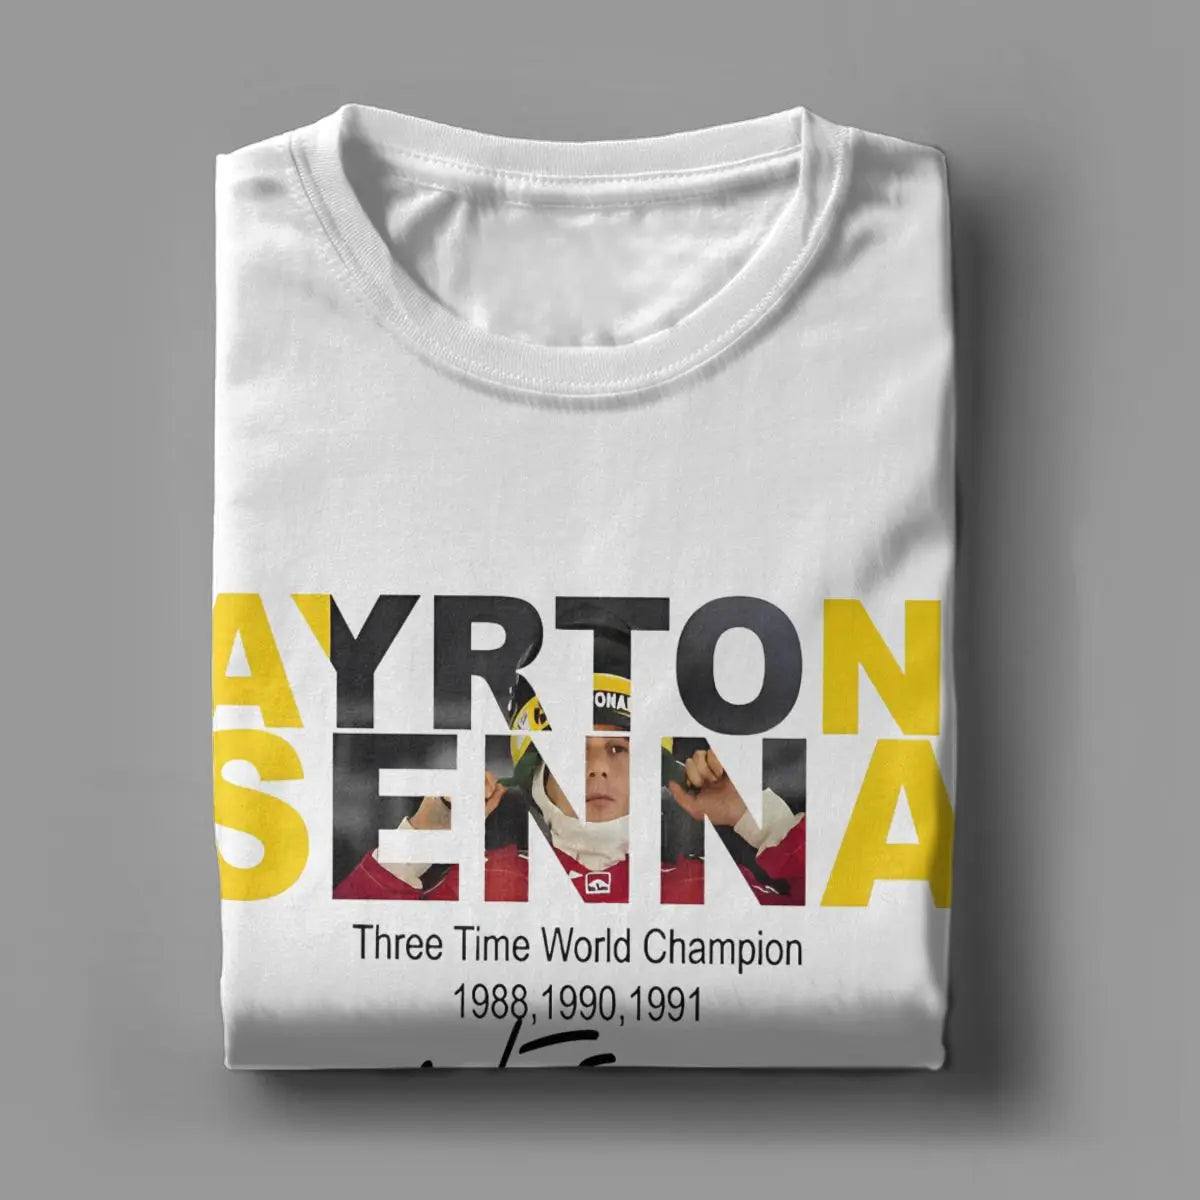 New Arrival Men Women Ayrton Senna World Champions T-Shirts Accessories Vintage Cotton Racing T Shirt Top Tee Clothes